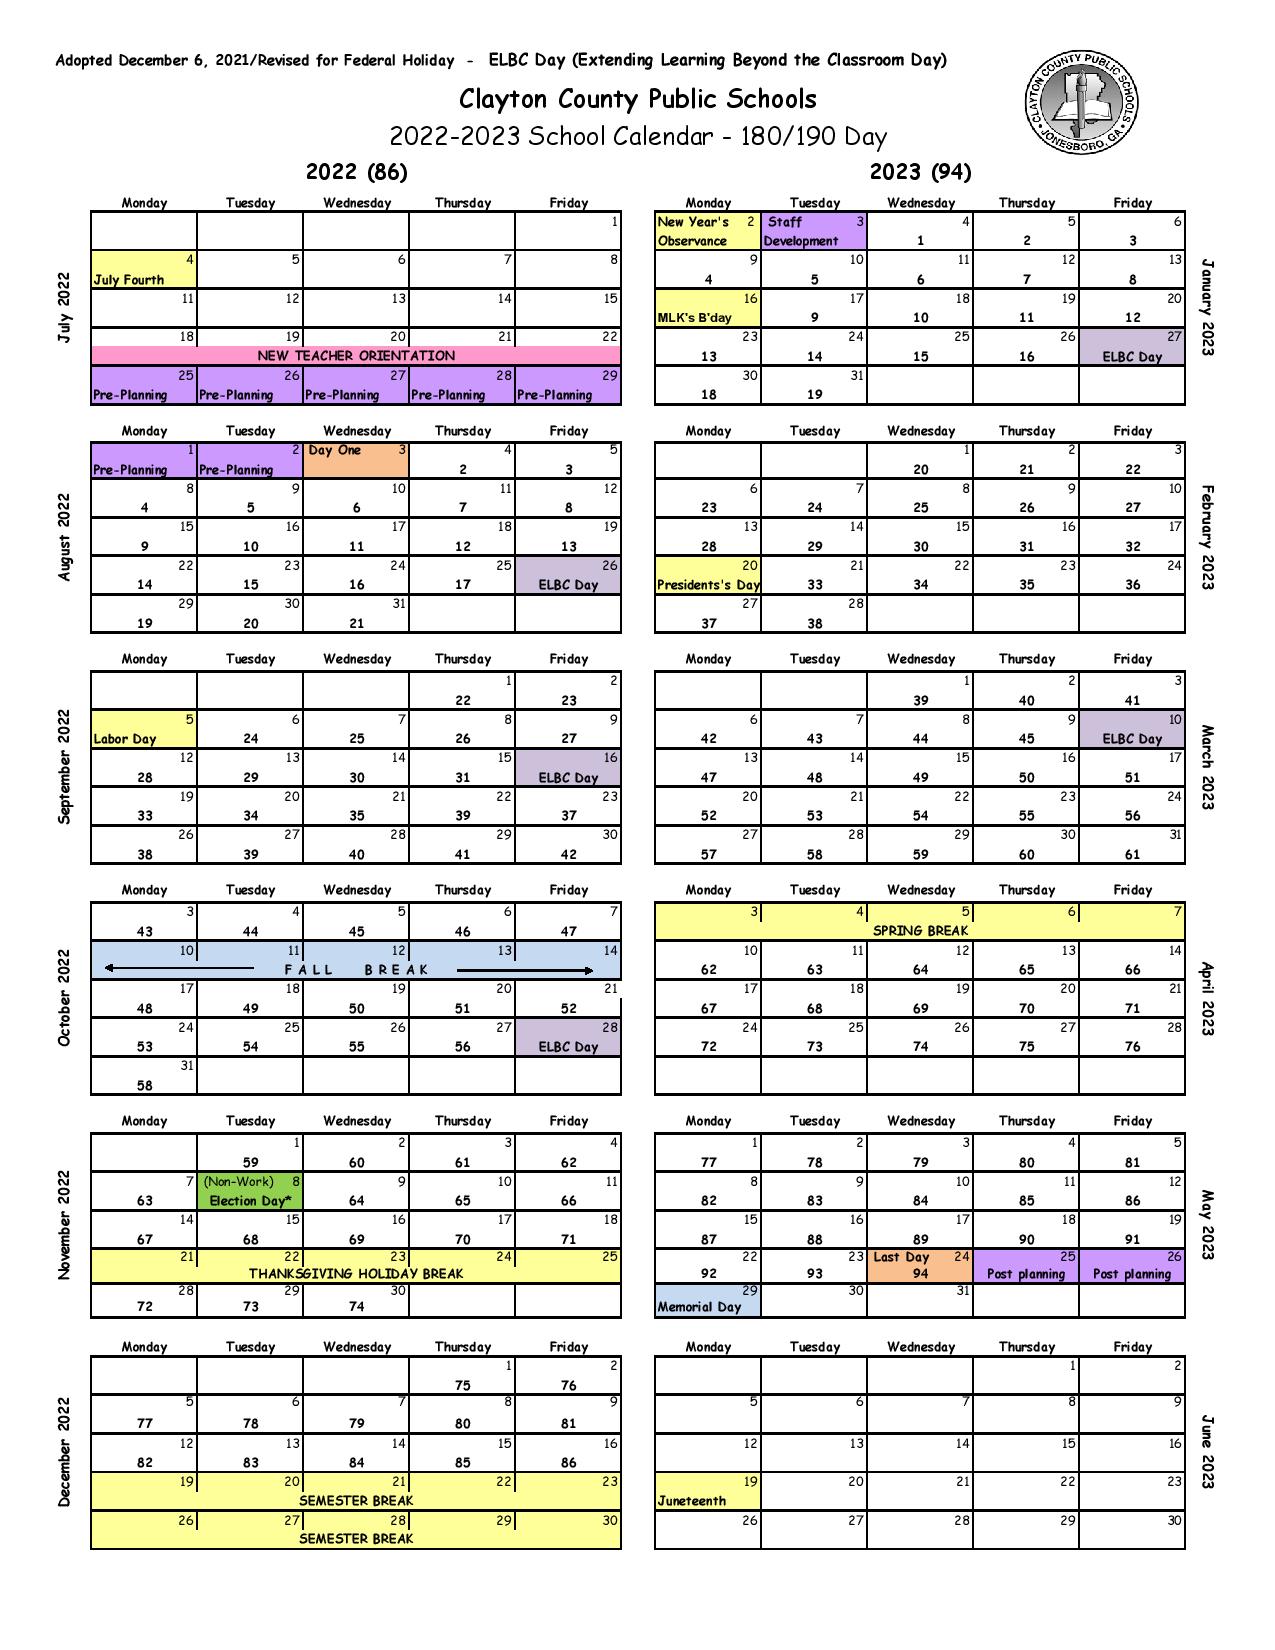 Clayton County Public Schools Calendar Holidays 20222023